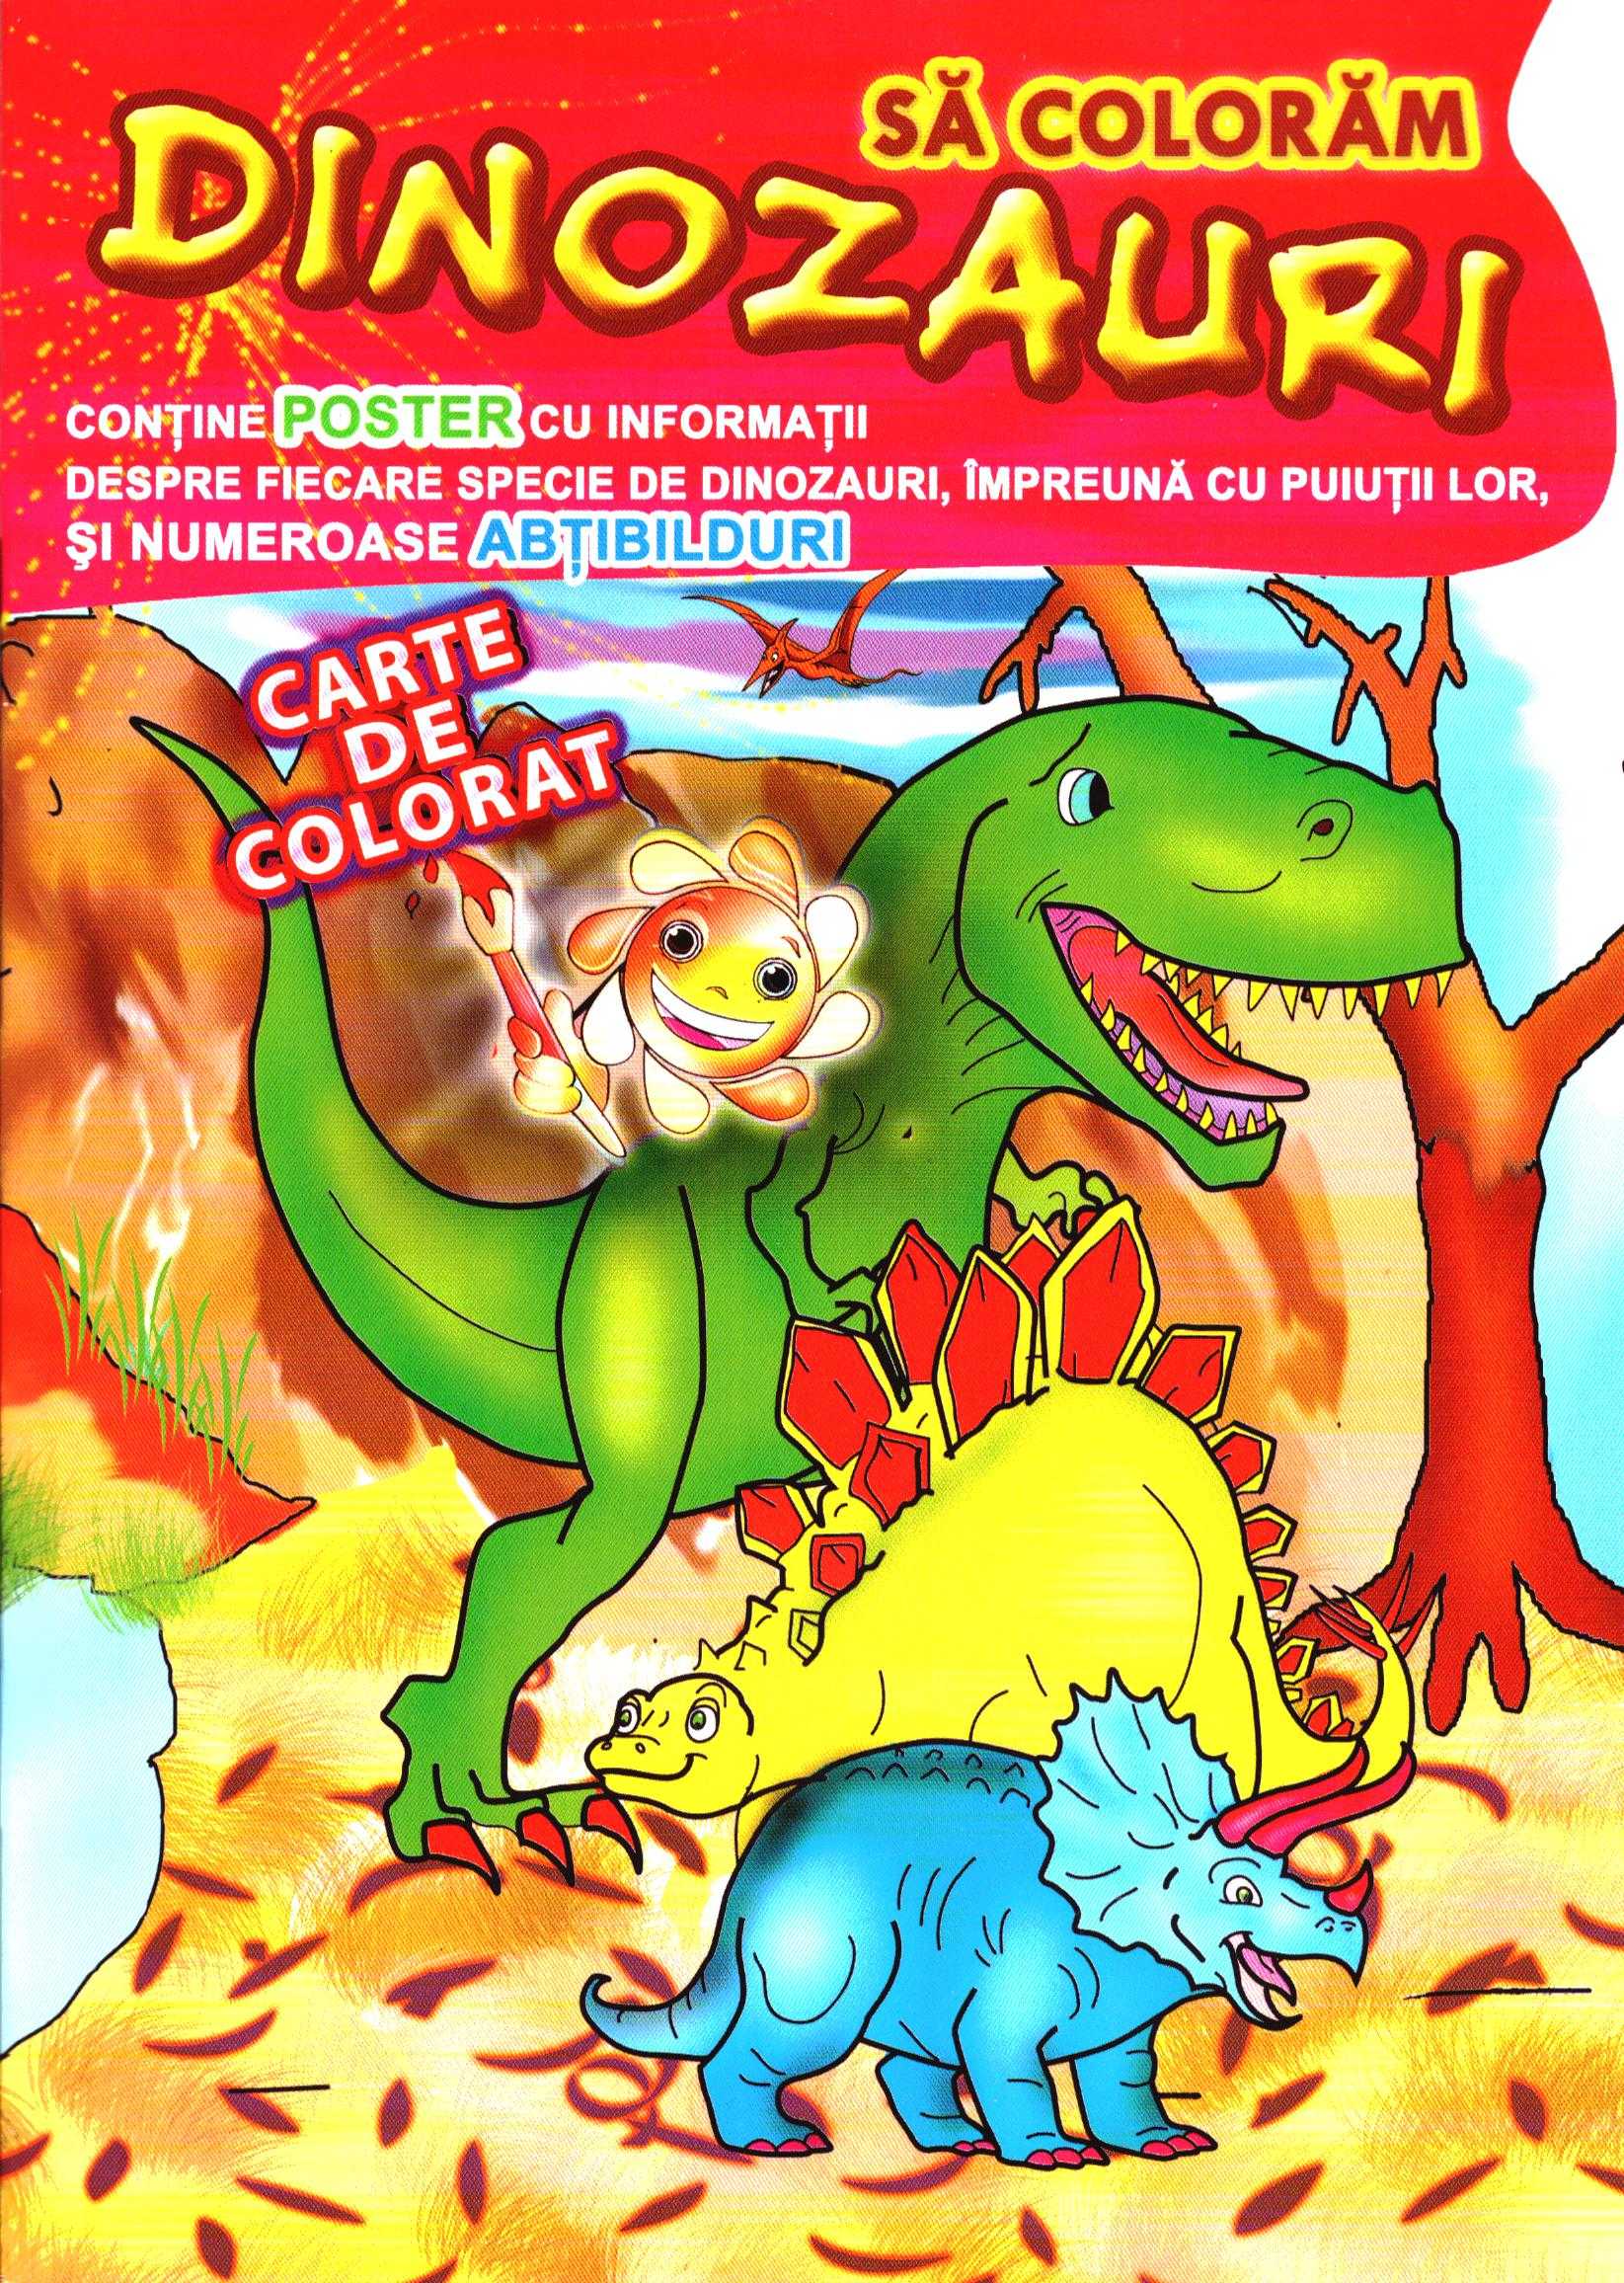 Sa coloram dinozauri